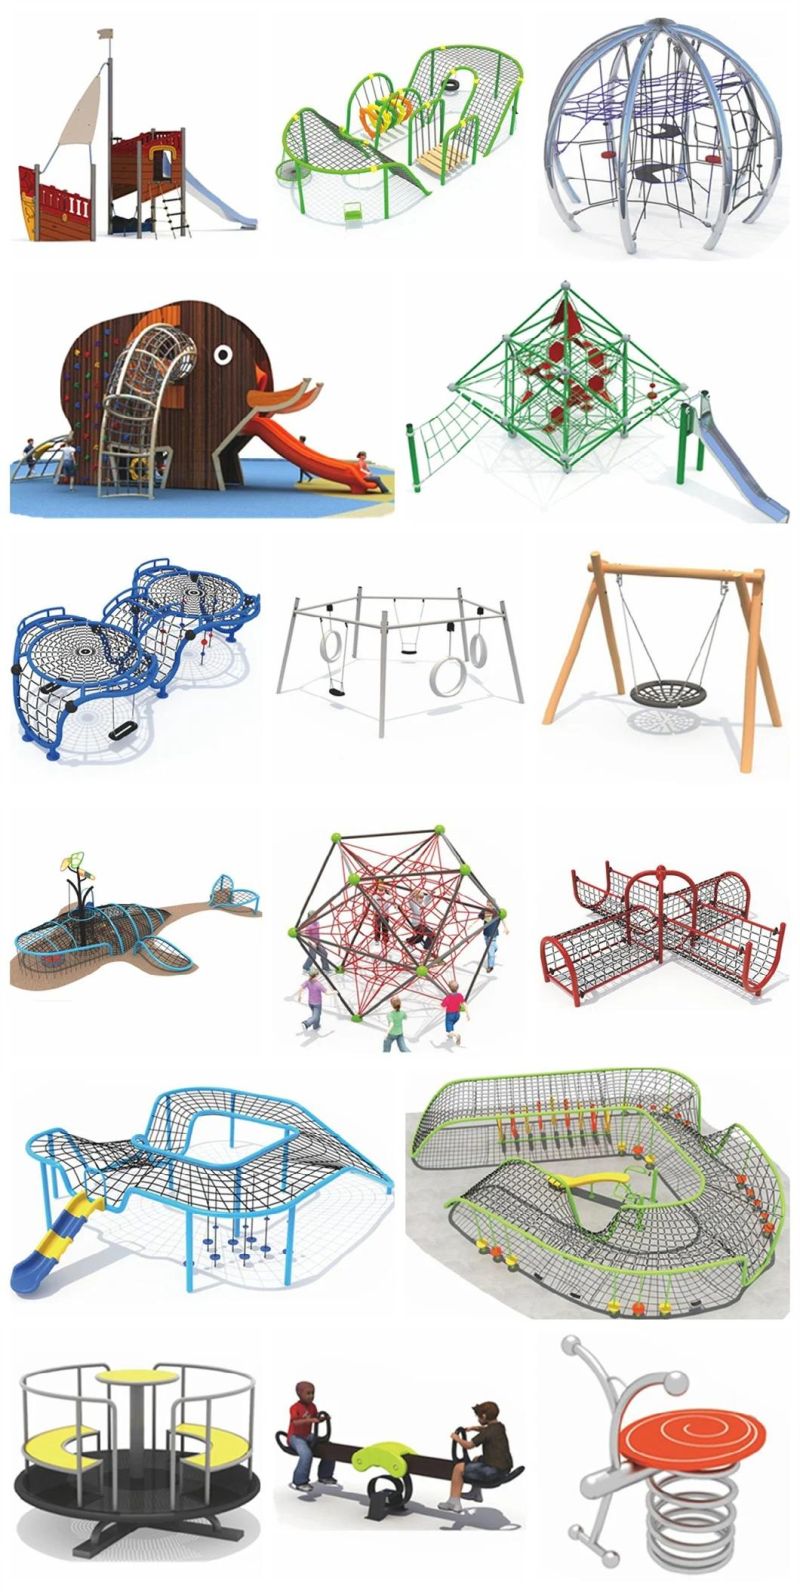 Children′s Amusement Park Outdoor Playground Slide Climbing Net Adventure Equipment